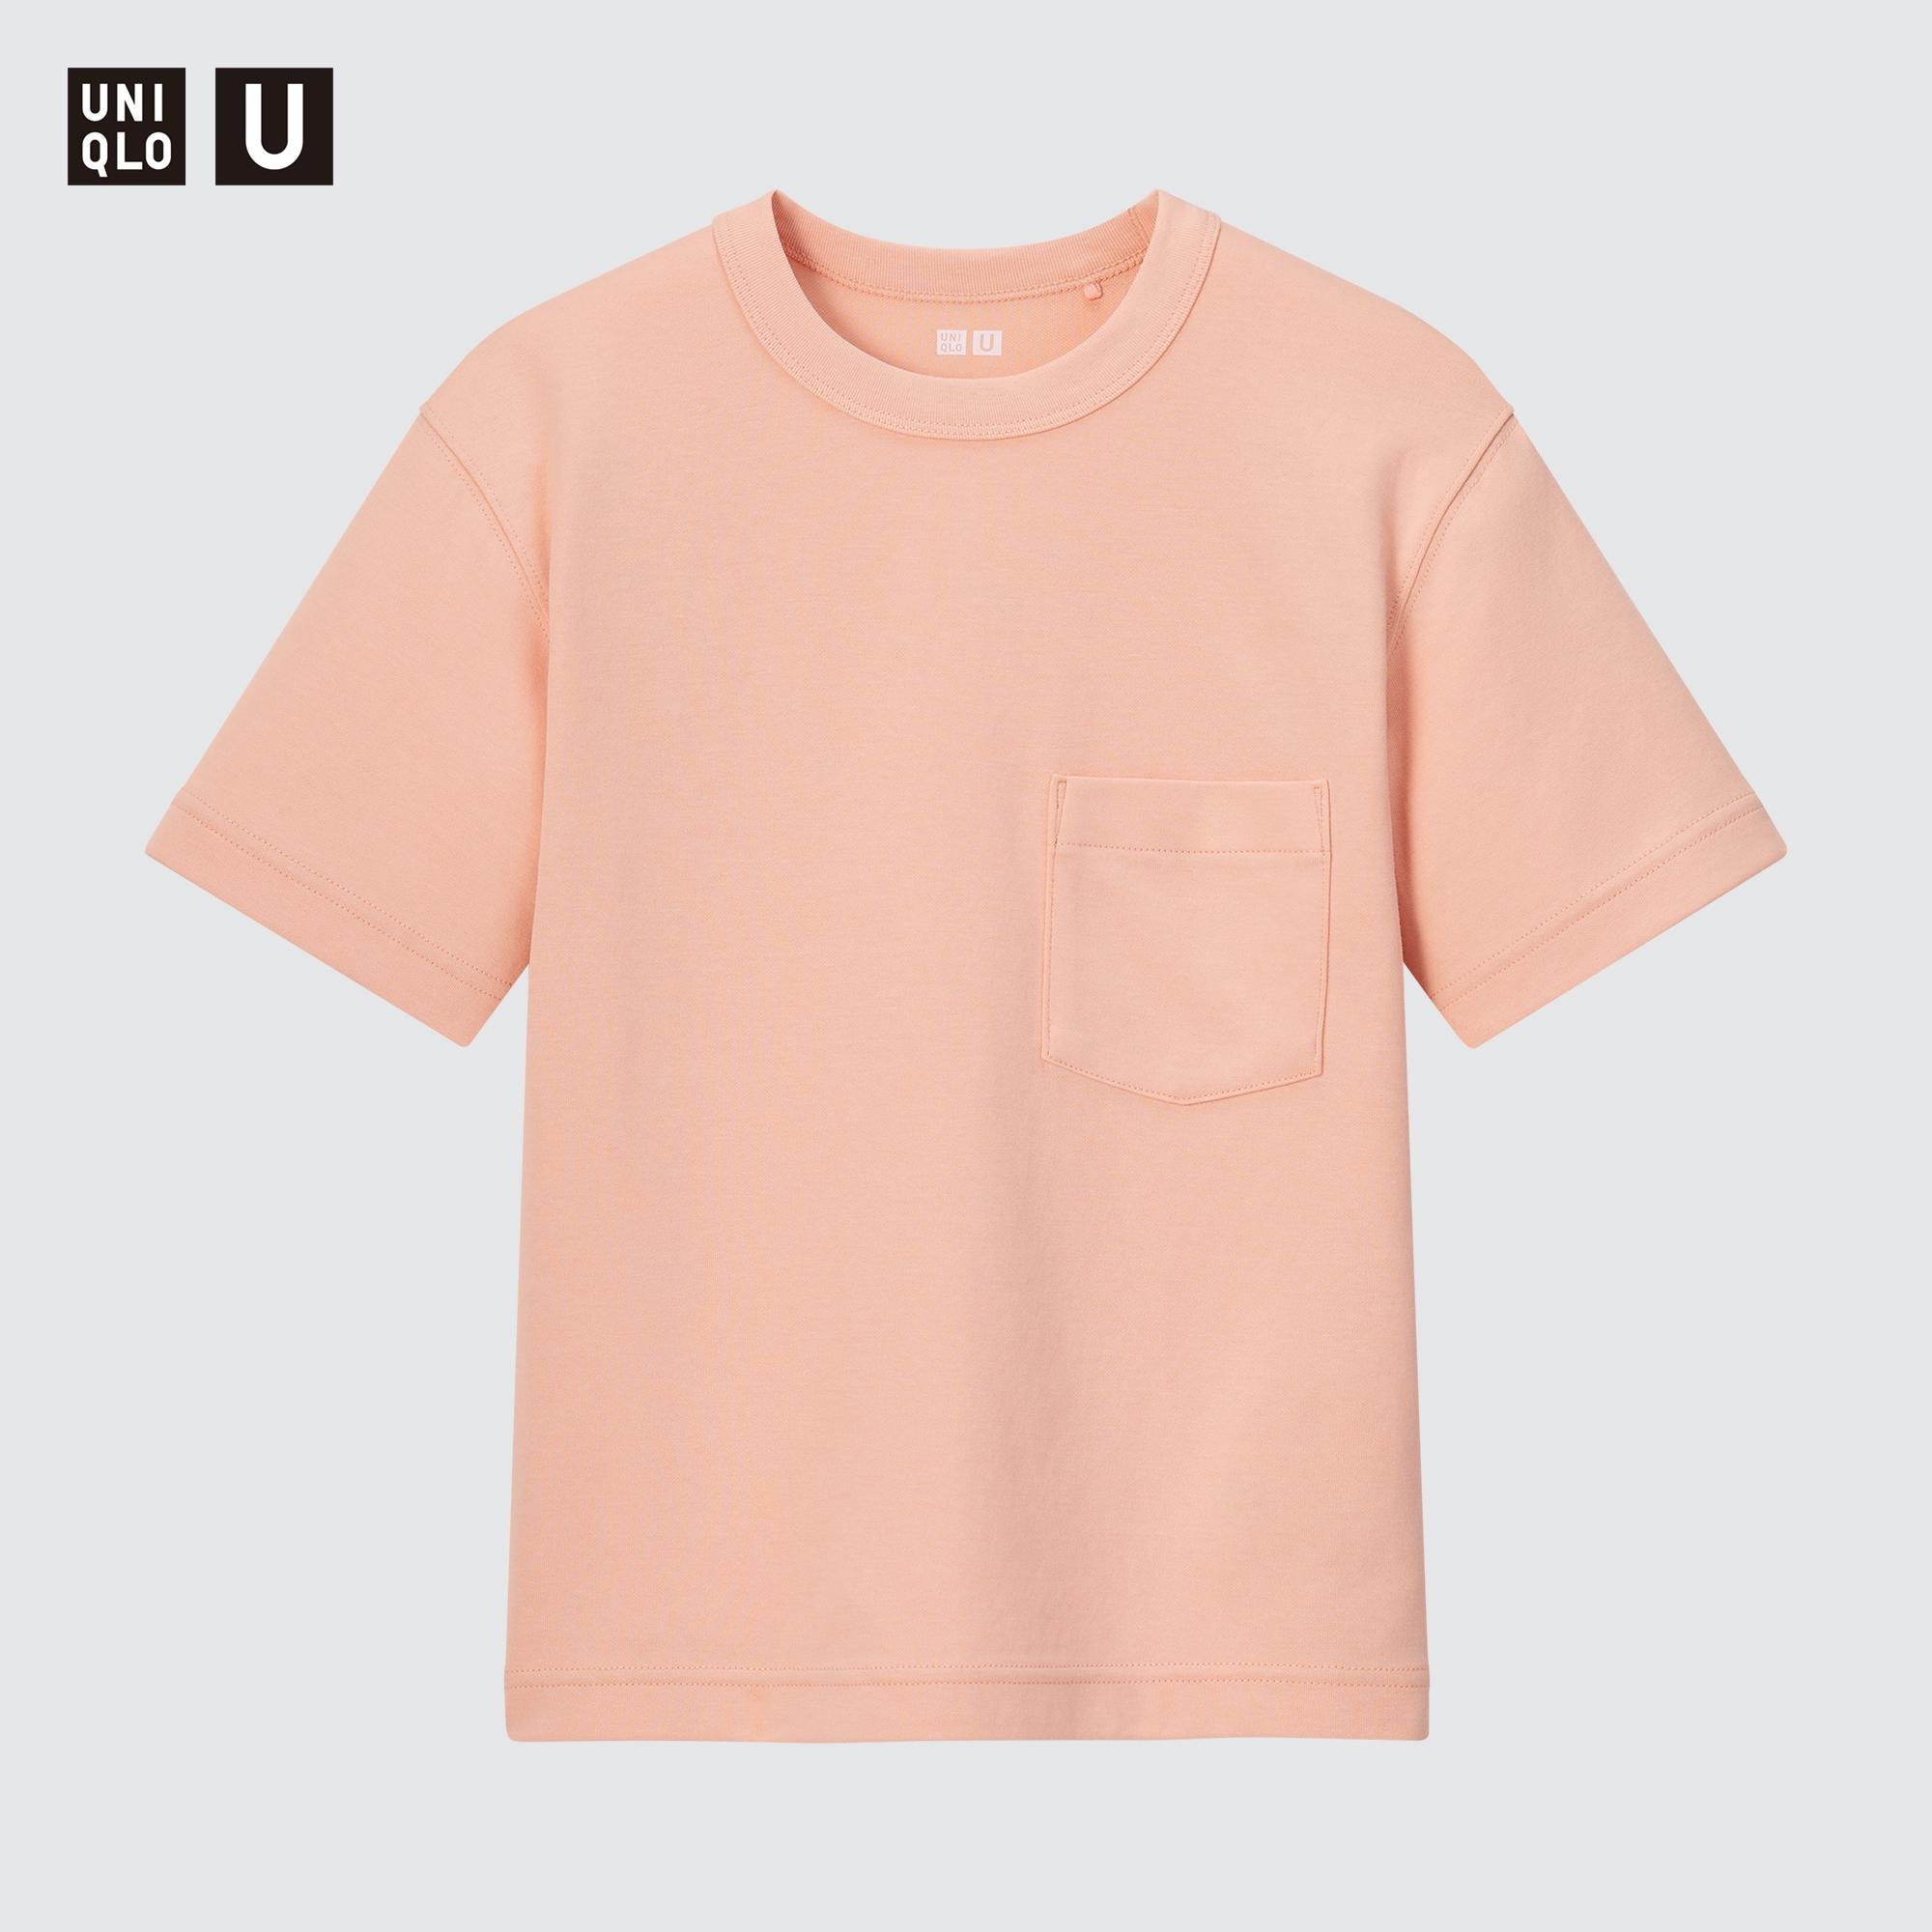 Kids エアリズムコットンクルーネックtシャツ 半袖 の口コミ 評判 2ページ目 ユニクロ 商品番号 E 000